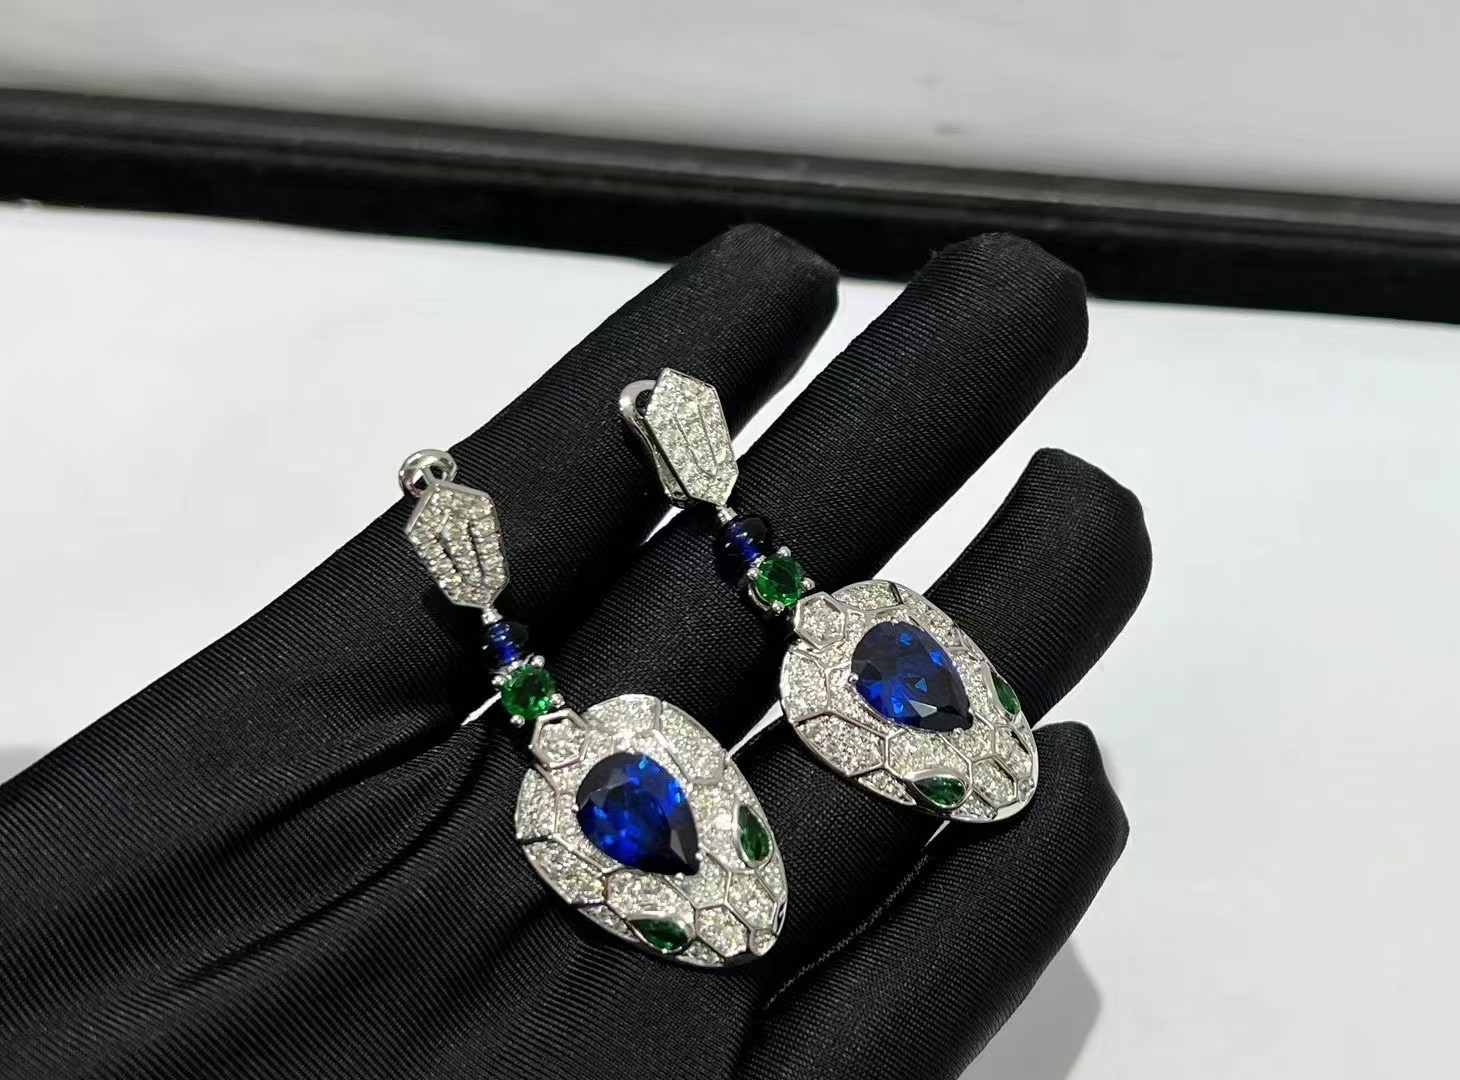 Wholesale custom jewelry solid 18 karat gold jewelry luxury gems jewelry earrings from china suppliers